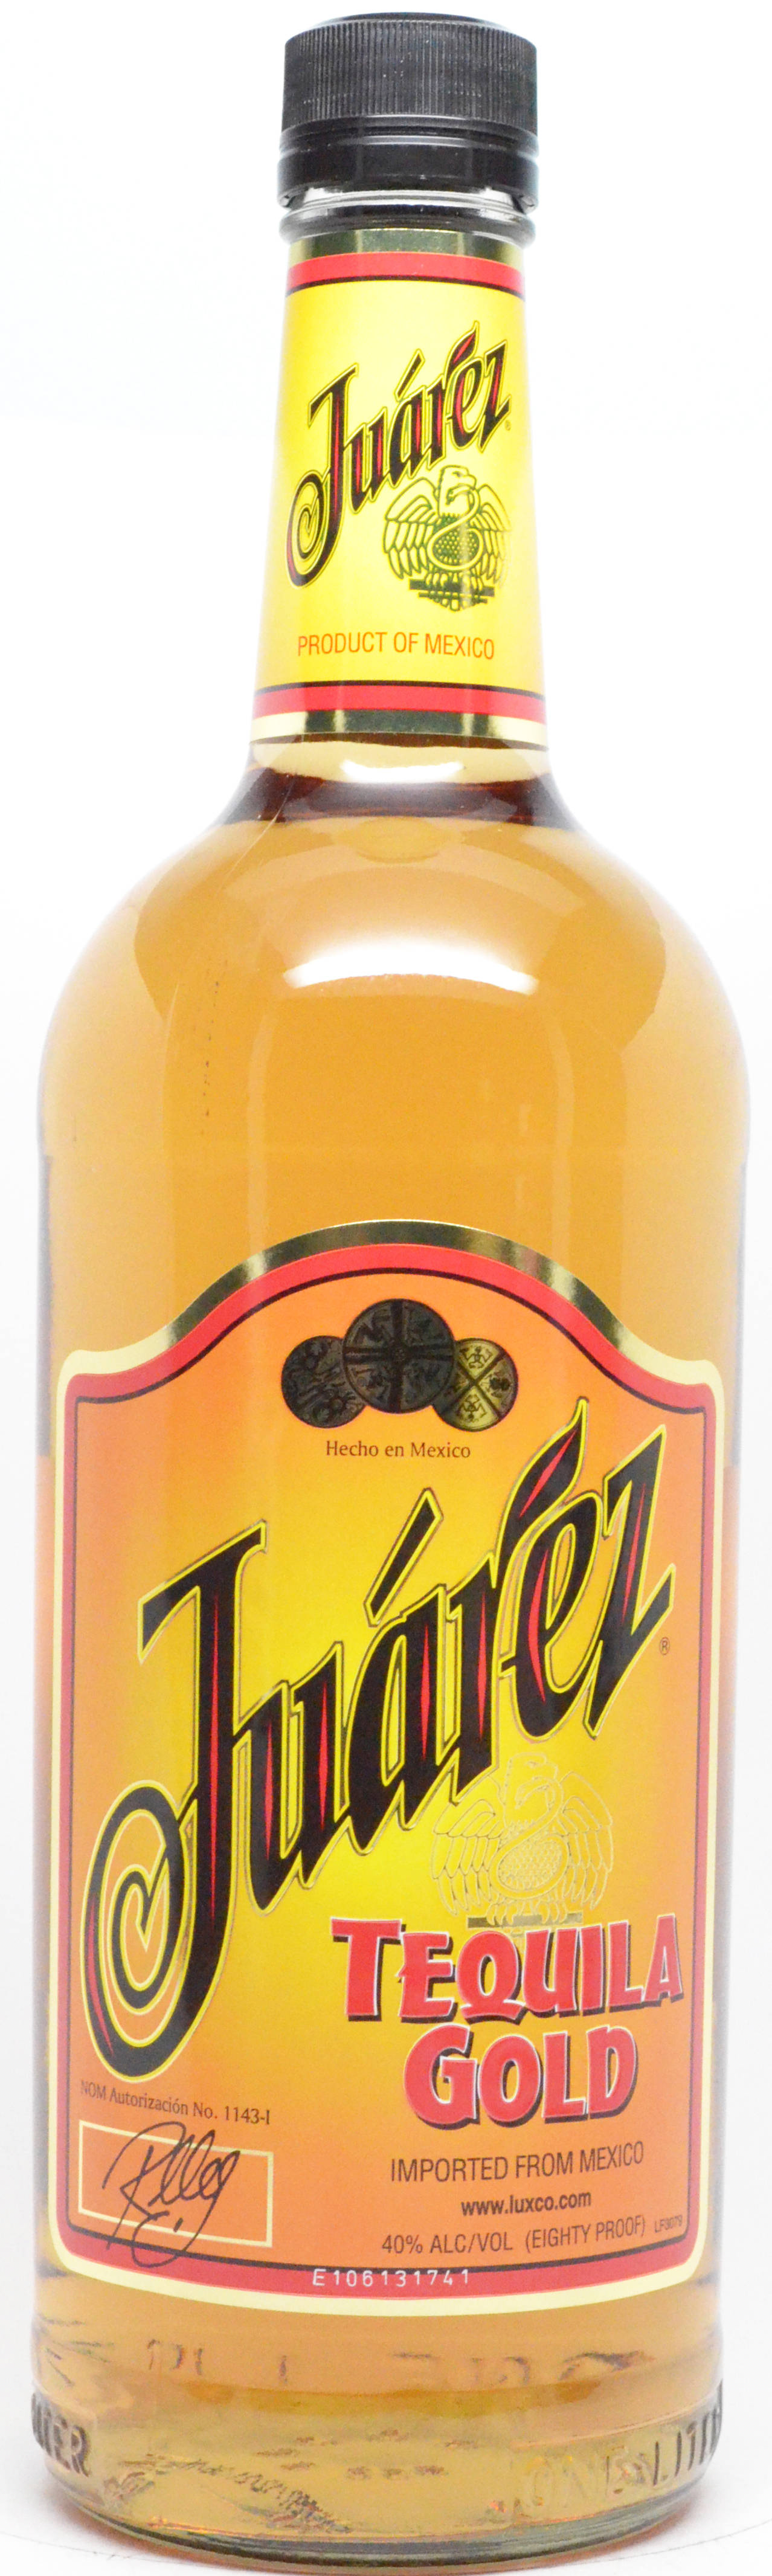 Juarez Tequila Golden Yellow Bottle Wallpaper